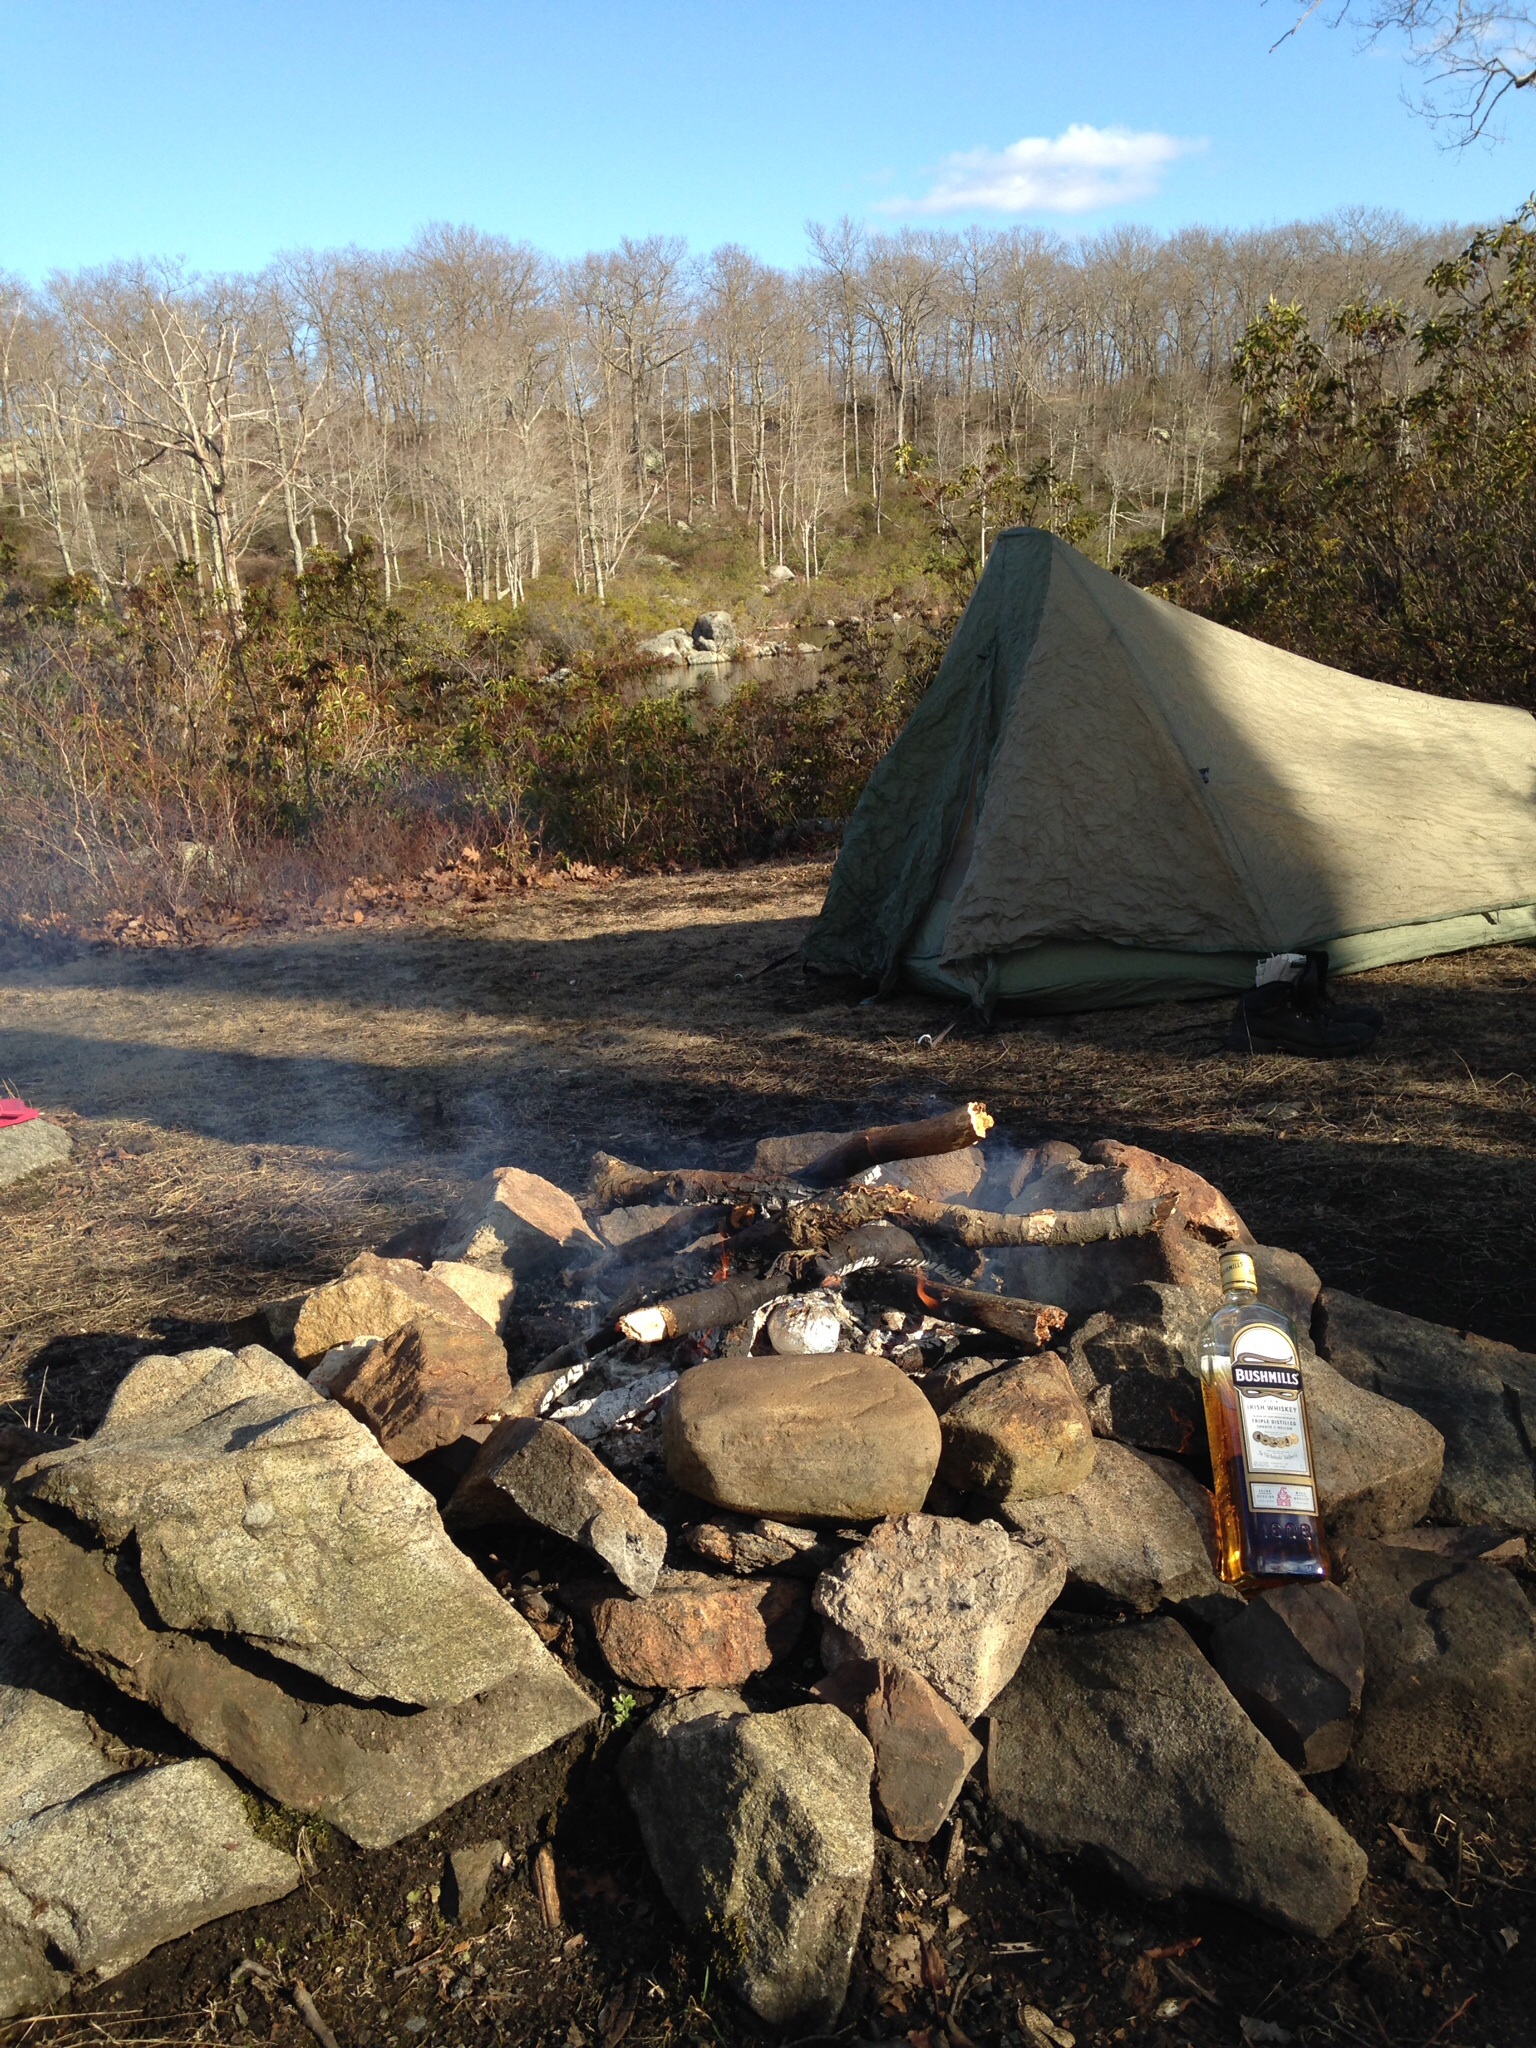 Bushmills and campsite selfie